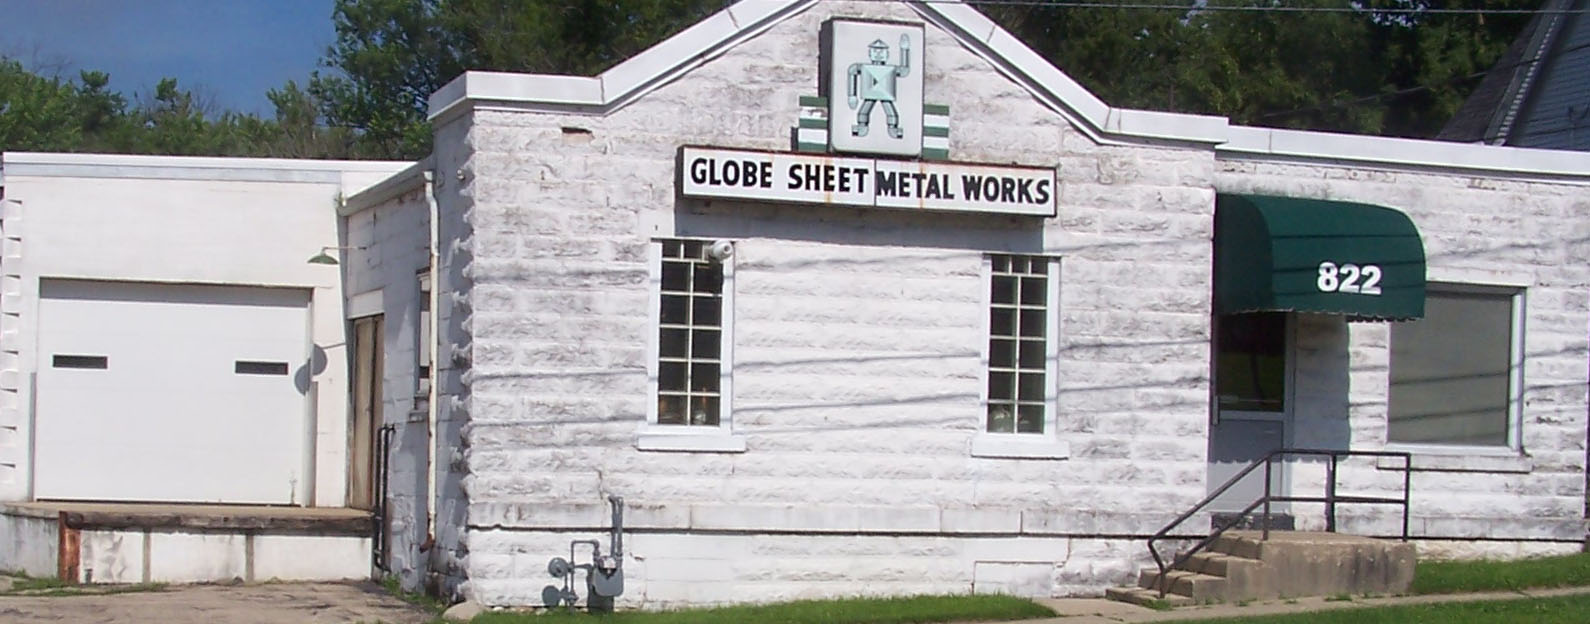 Pic of Globe Sheet Metal building.